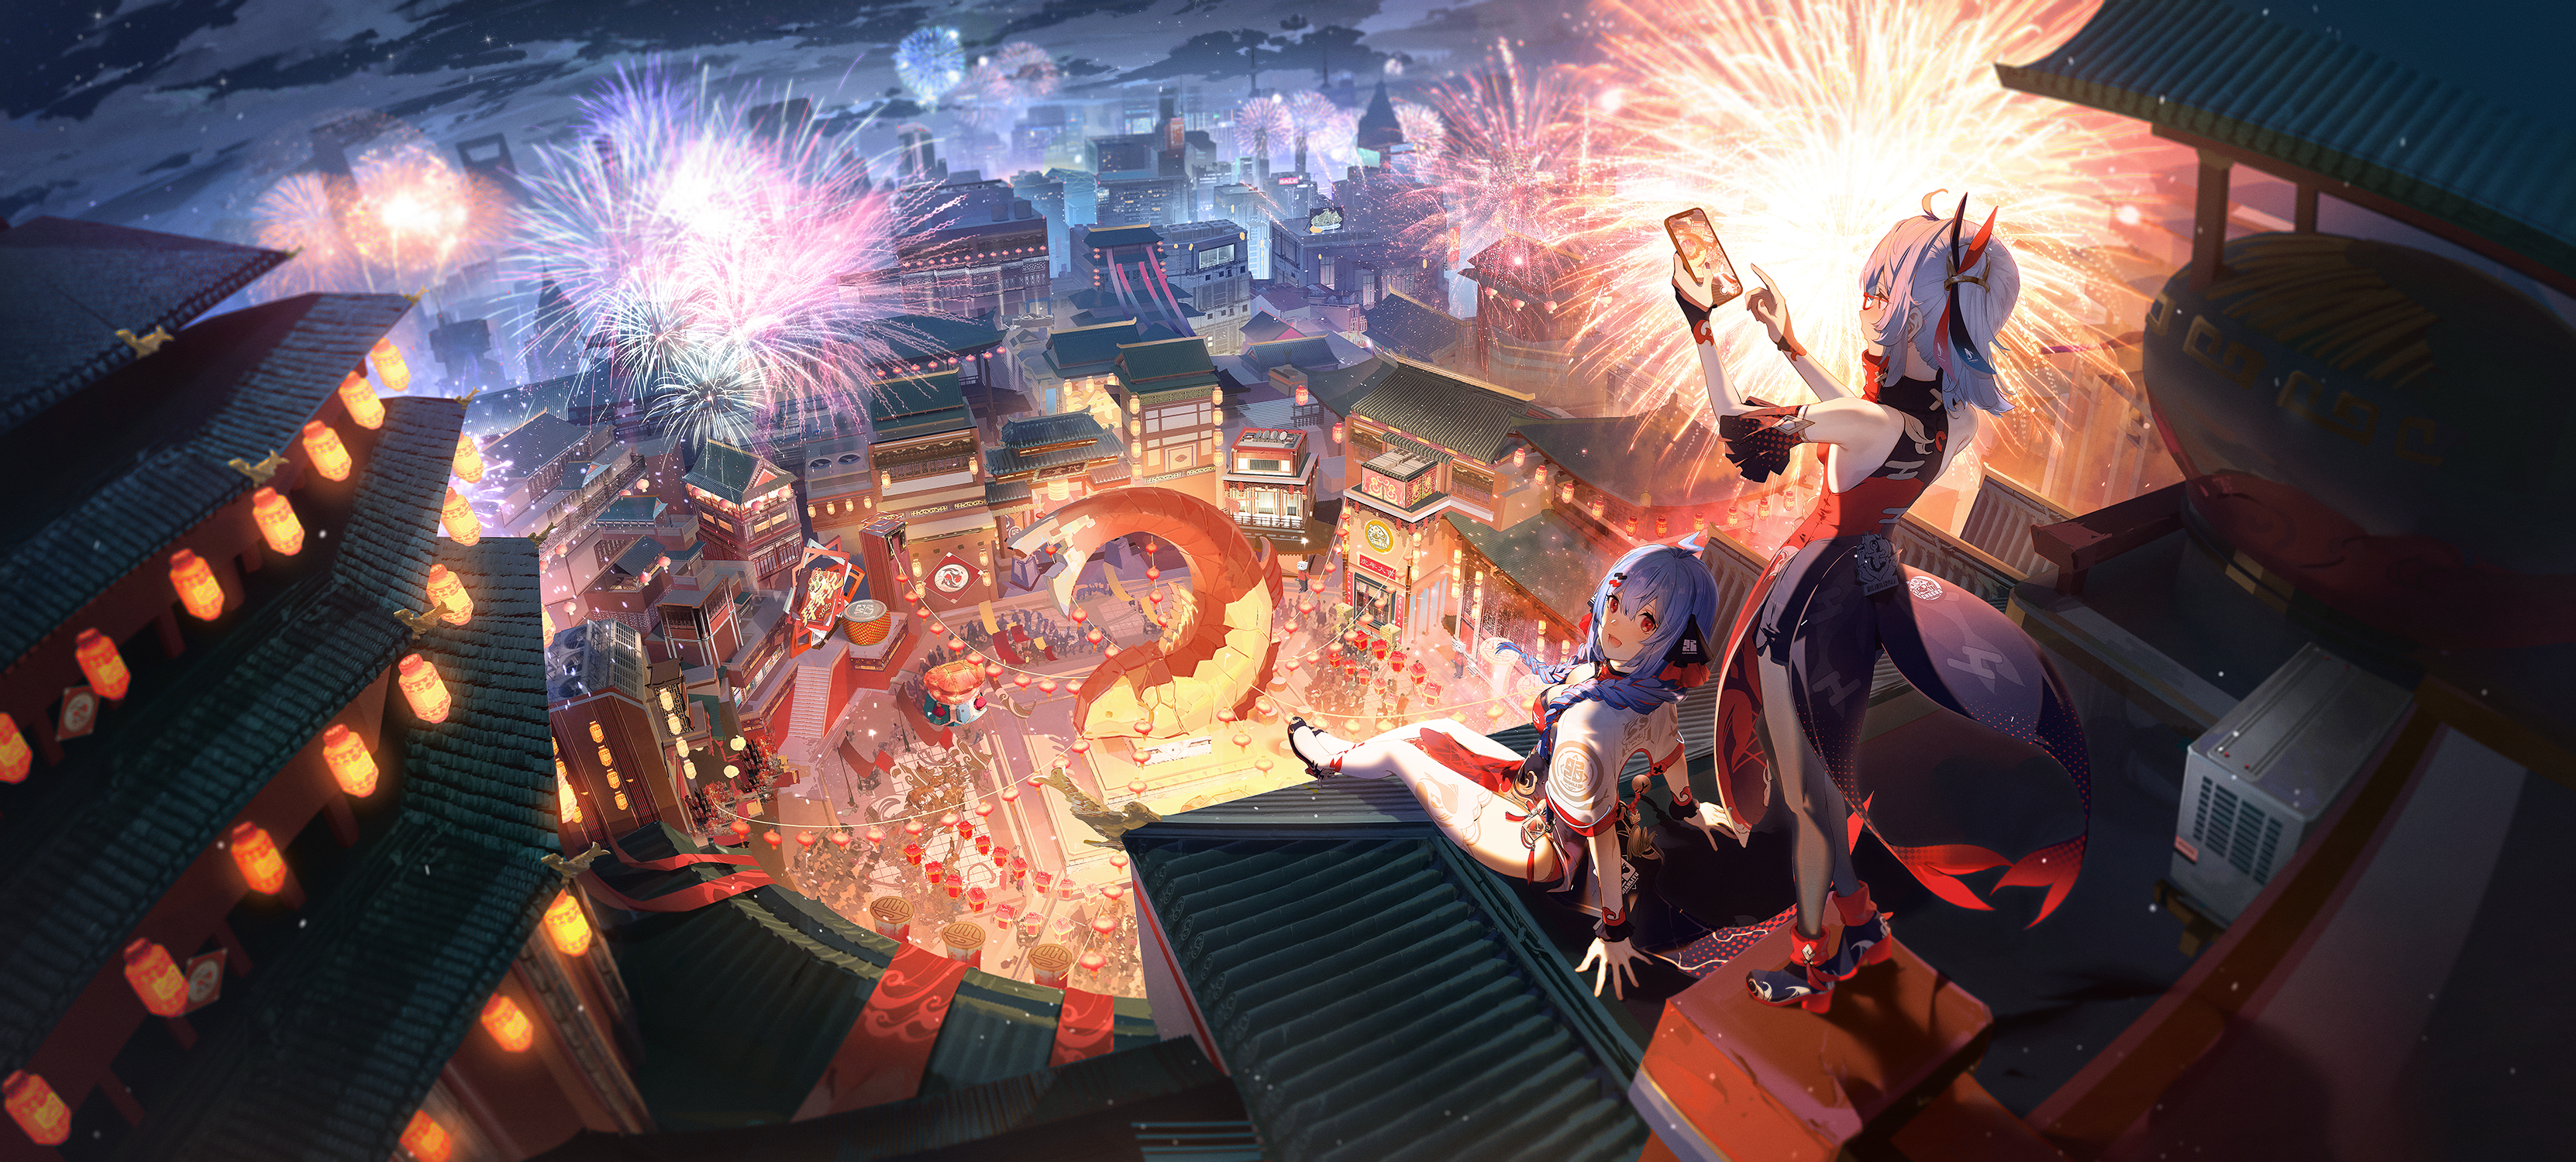 Bilibili Anime Girls Anime Fireworks Fish Festivals Chinese Architecture 3324x1500